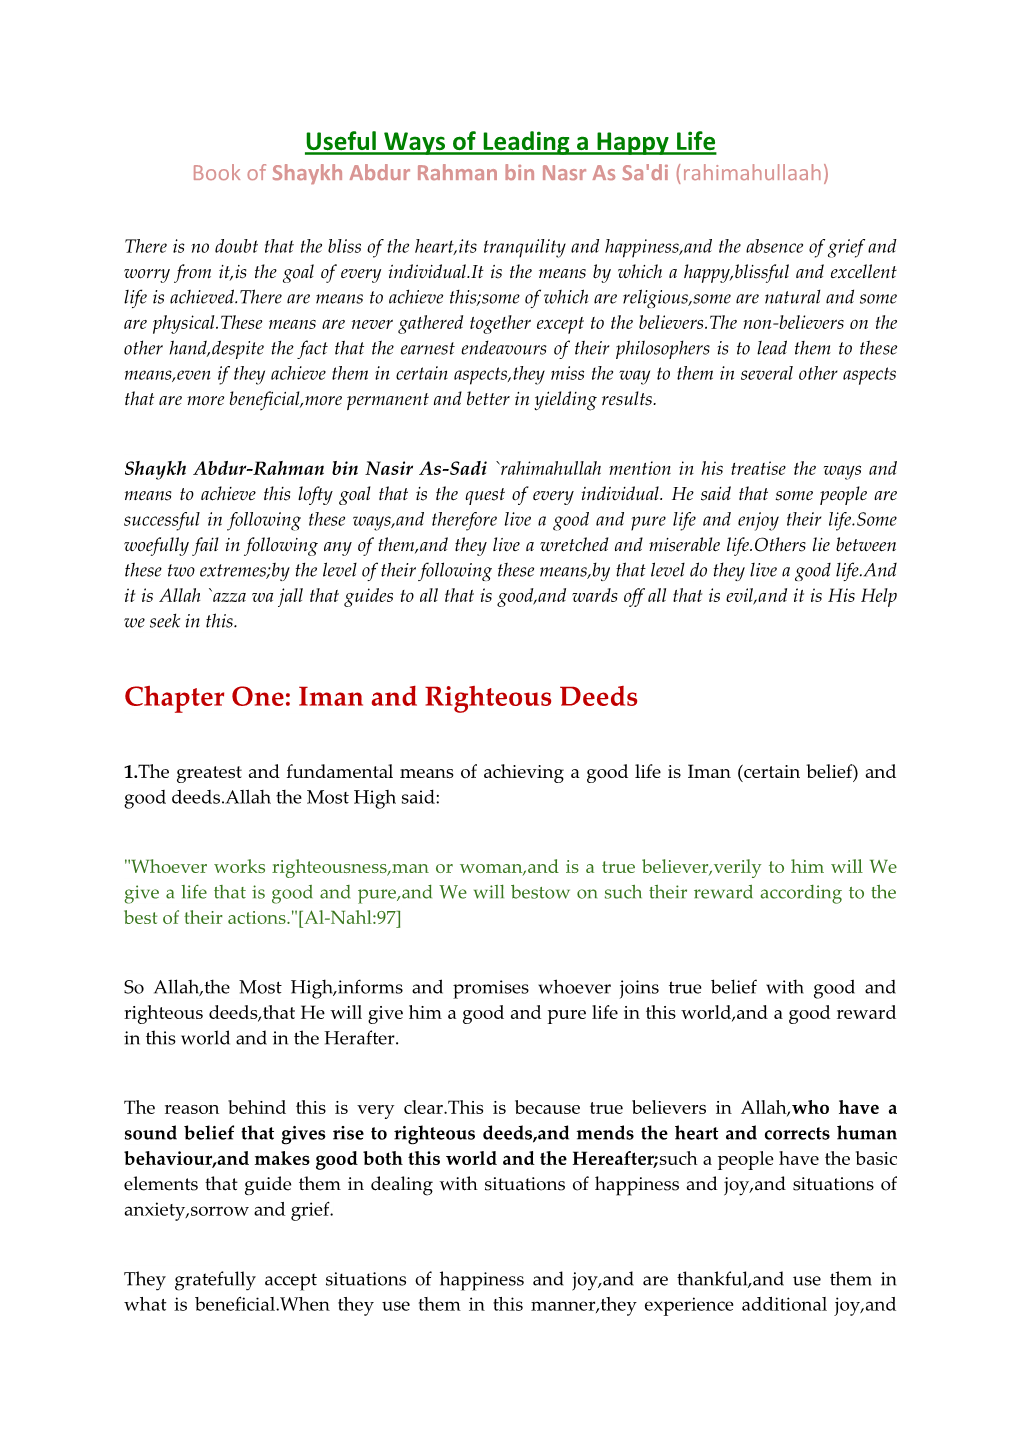 Useful Ways of Leading a Happy Life Book of Shaykh Abdur Rahman Bin Nasr As Sa'di (Rahimahullaah)